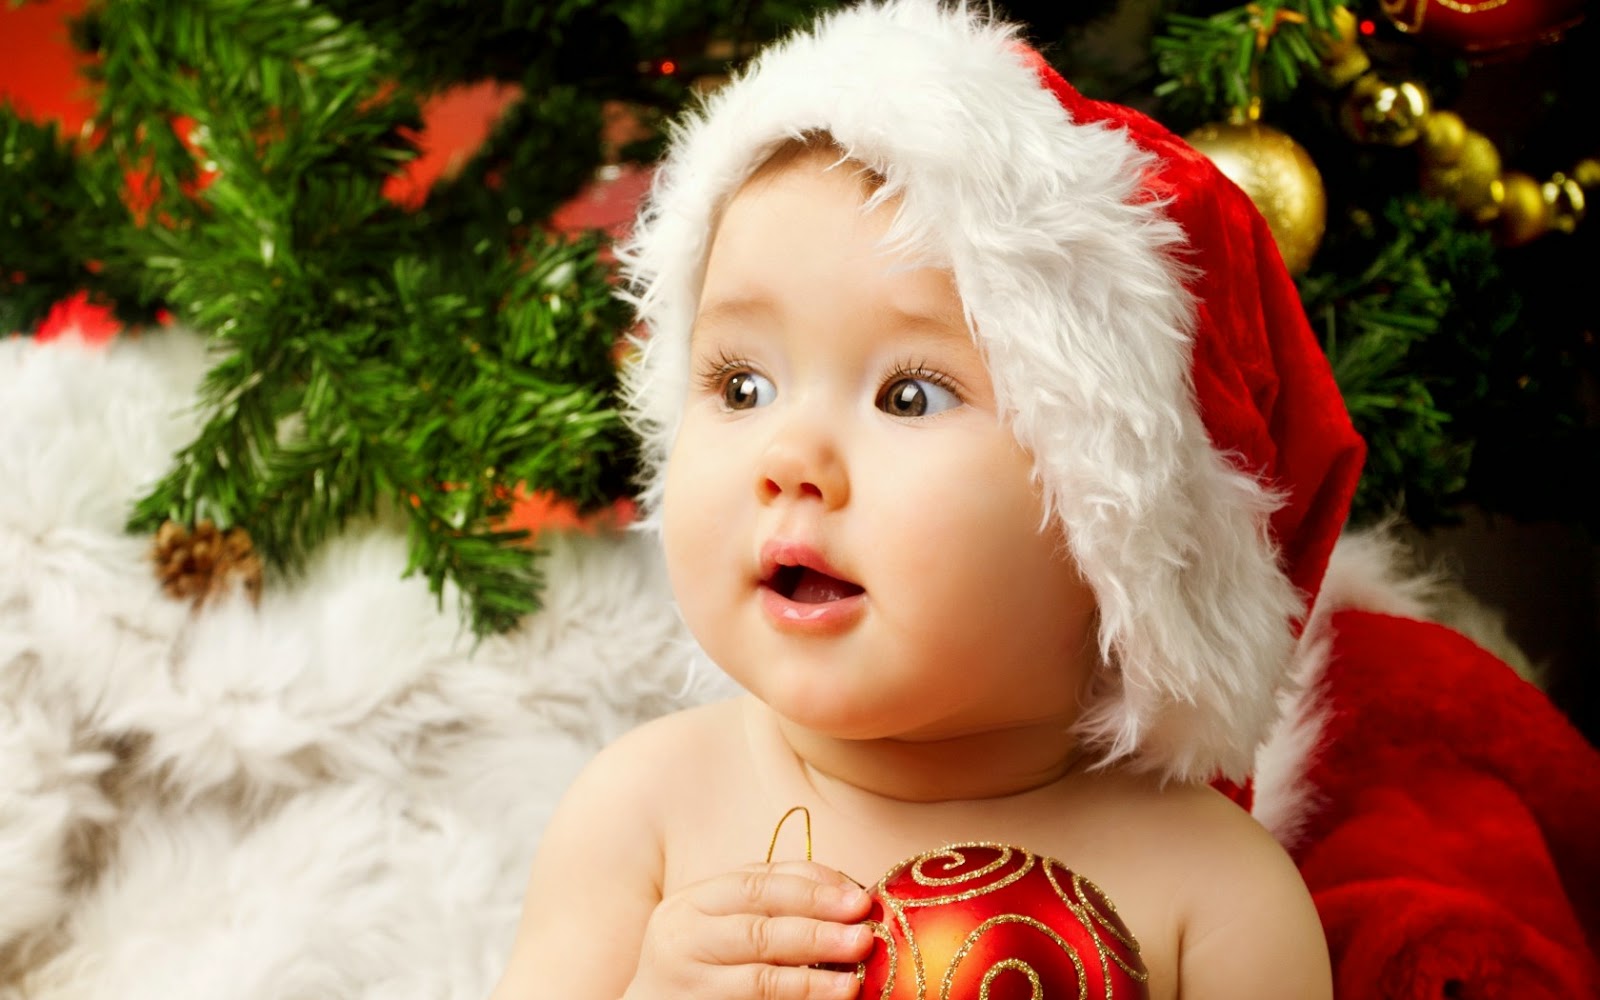 Koleksi Foto Bayi Bayi Lucu Merayakan Hari Natal Si Gambar